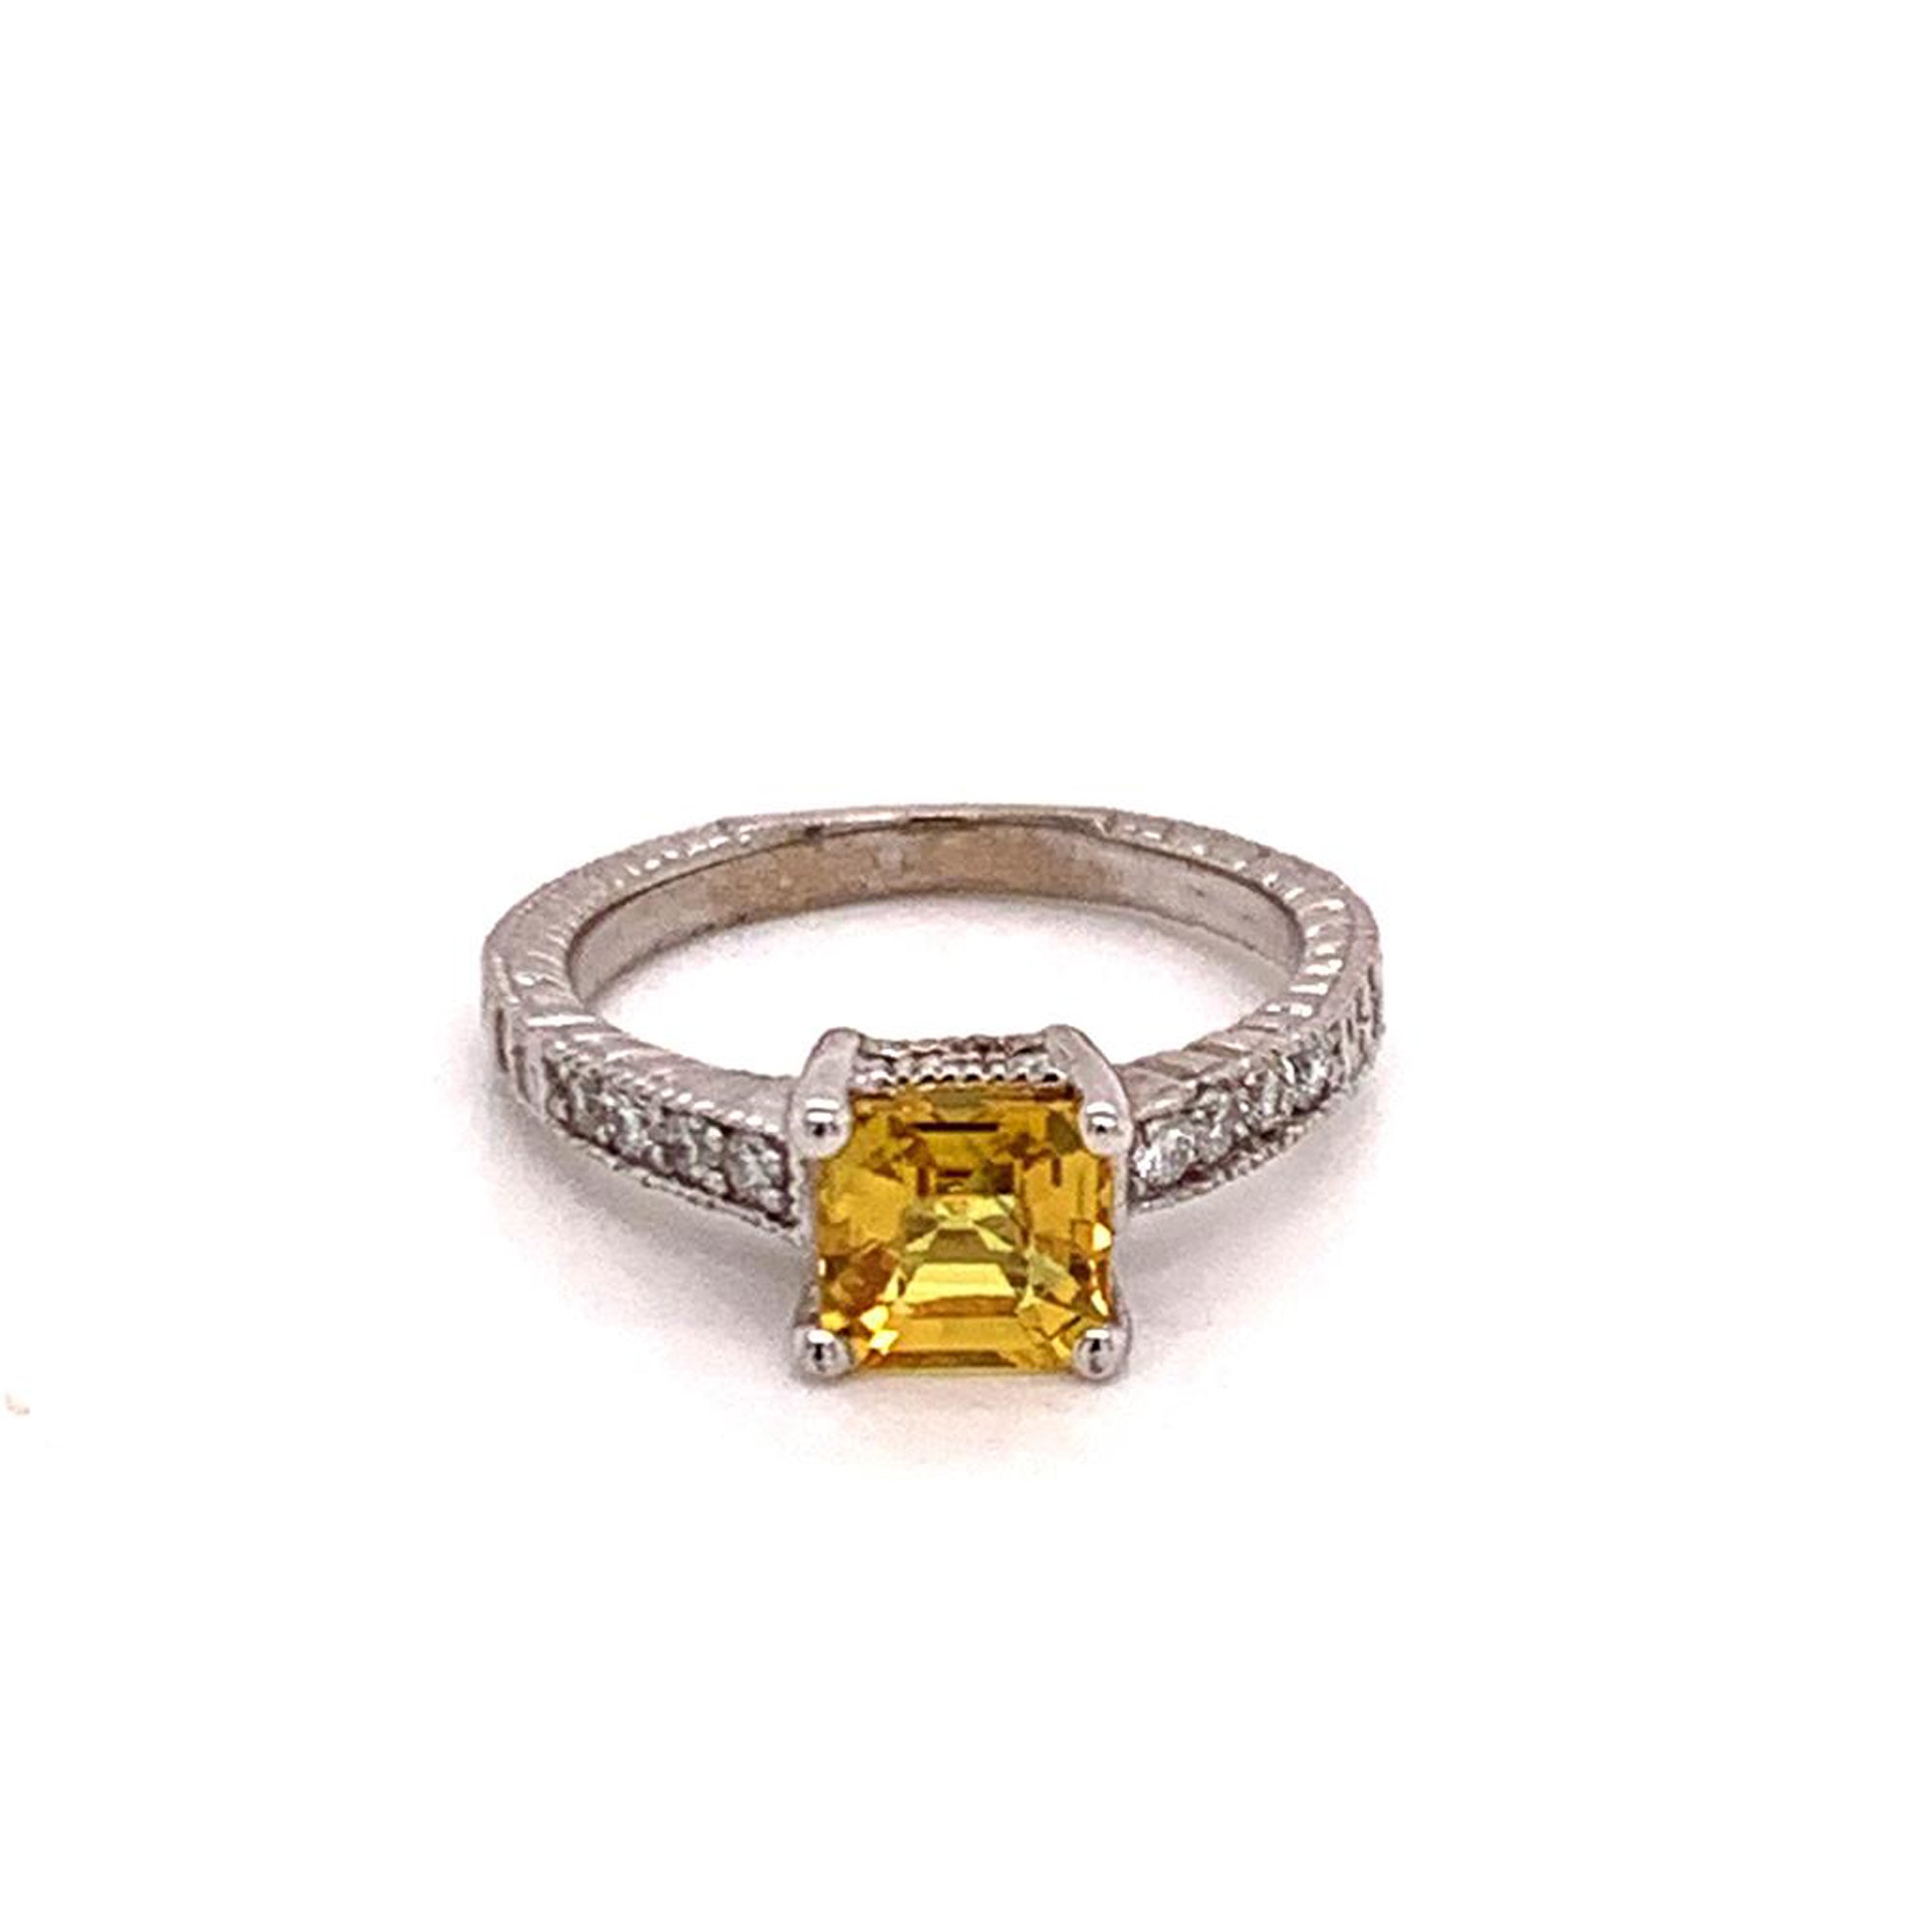 Diamond Yellow Sapphire Ring 14k Gold 1.66 tcw Women Certified $3,990 915184 - Certified Estate Jewelry